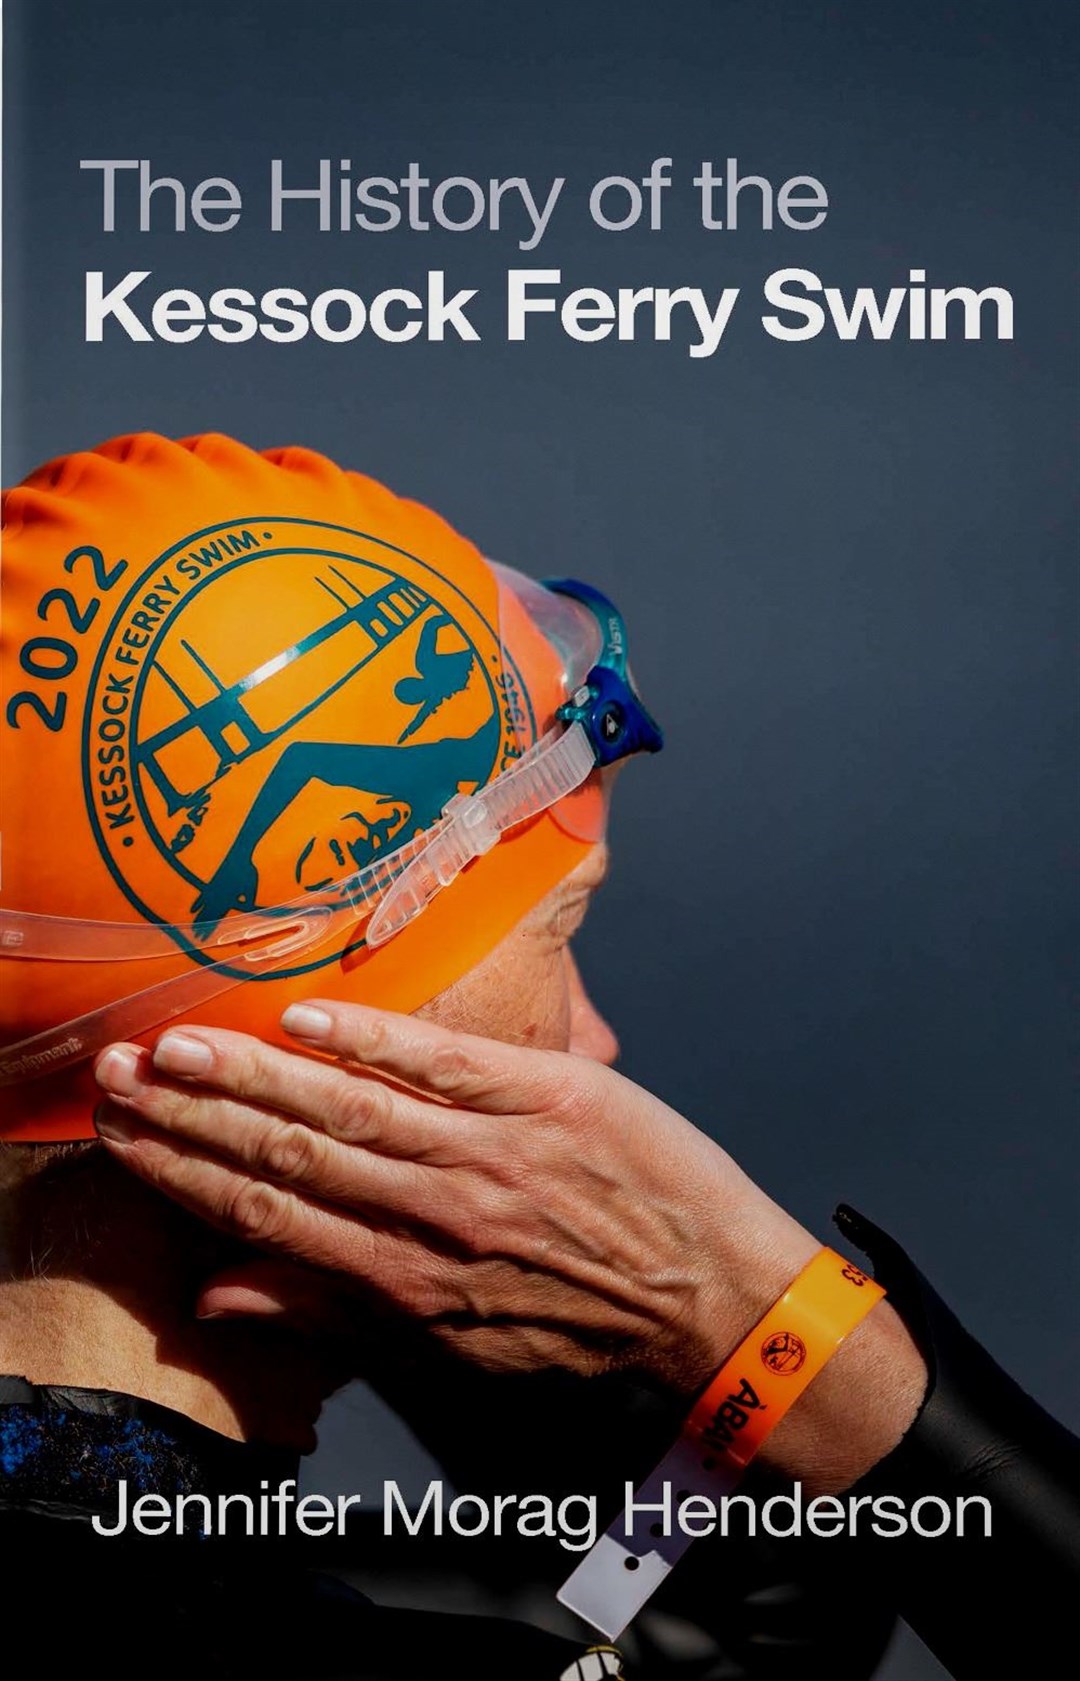 The History Of The Kessock Ferry Swim by Jennifer Morag Henderson.